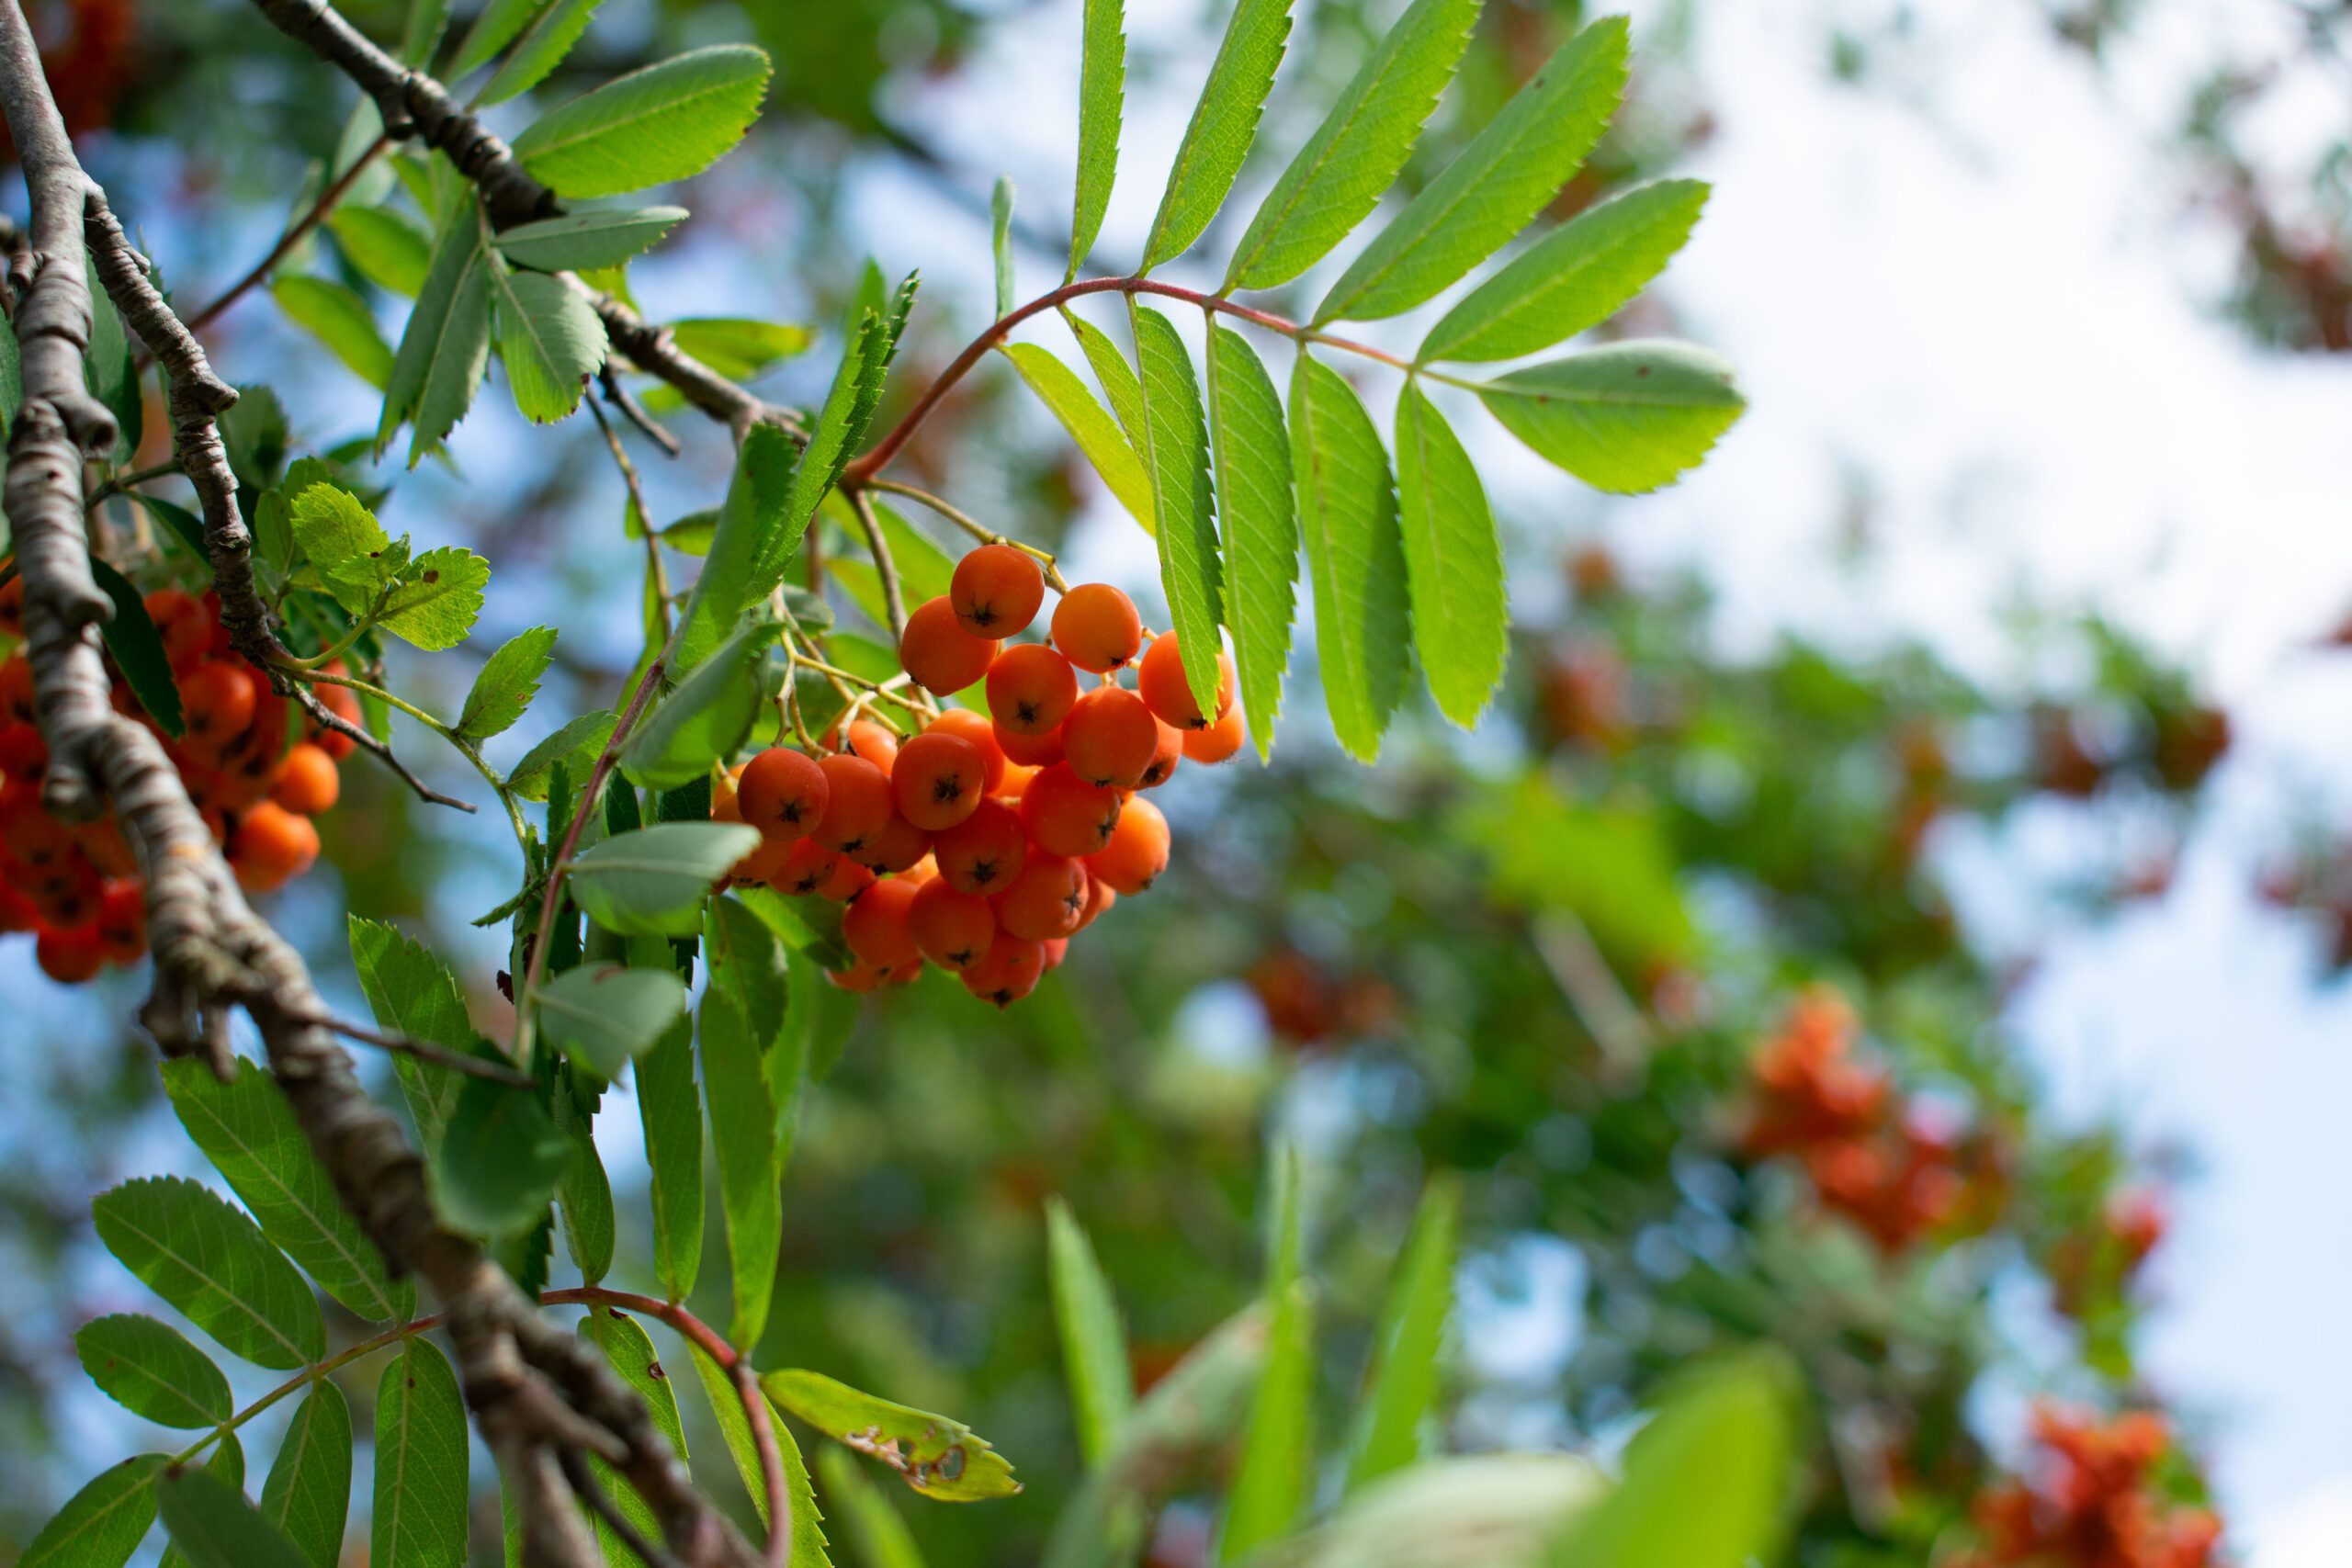 Sorbus arnoldina Golden Wonder orange berries and green leaves